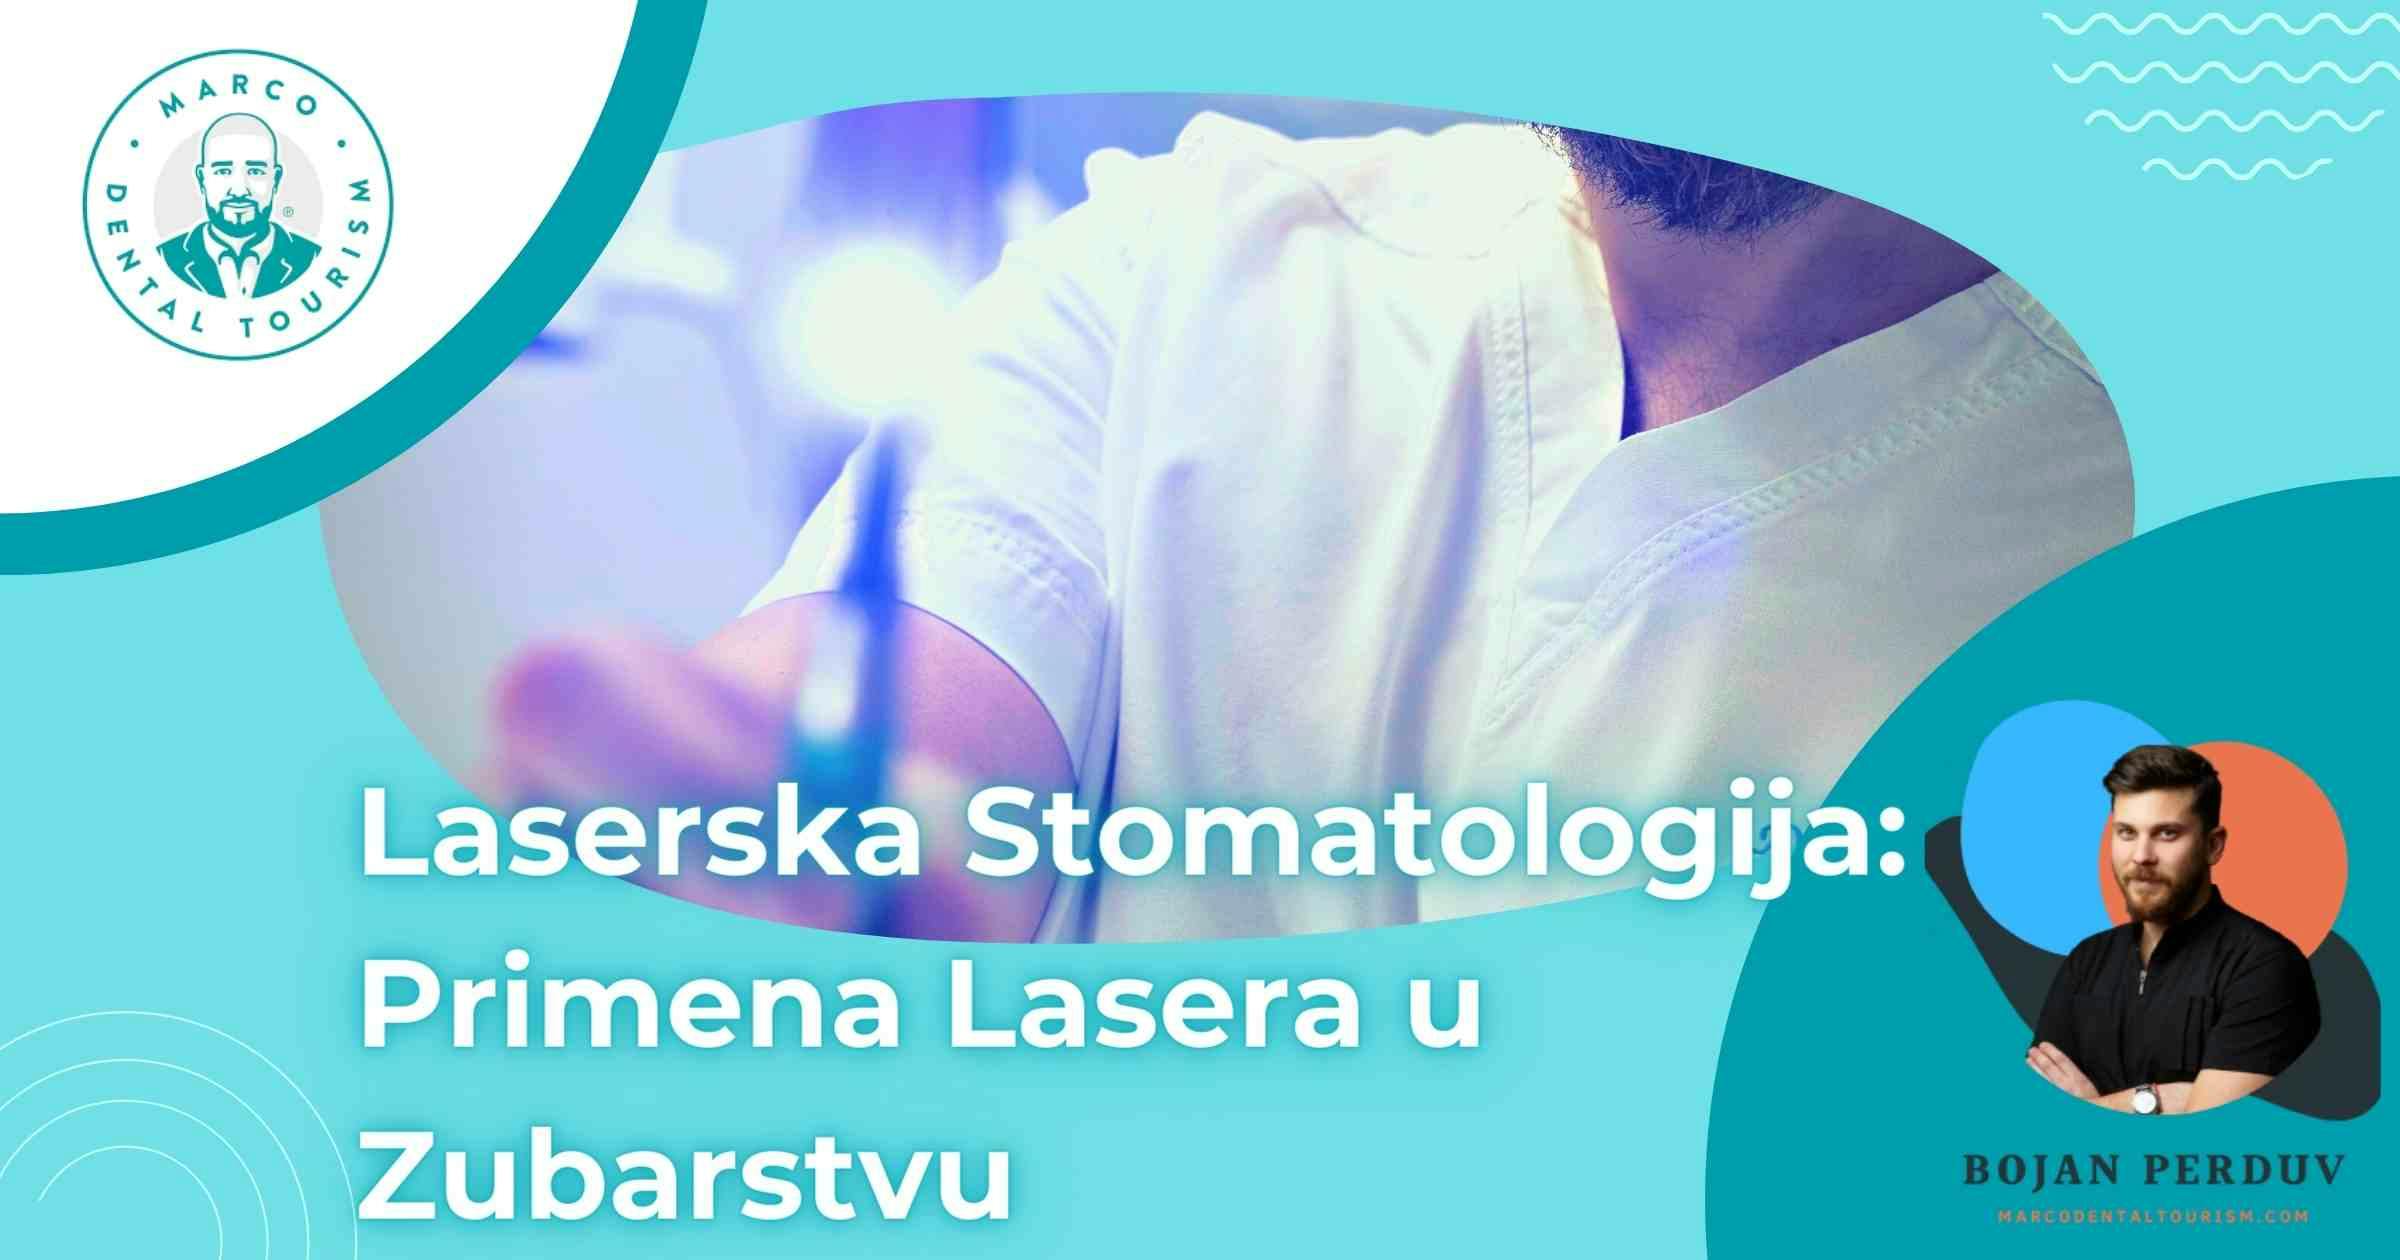 Laserska Stomatologija: Sve Informacije i Prednosti